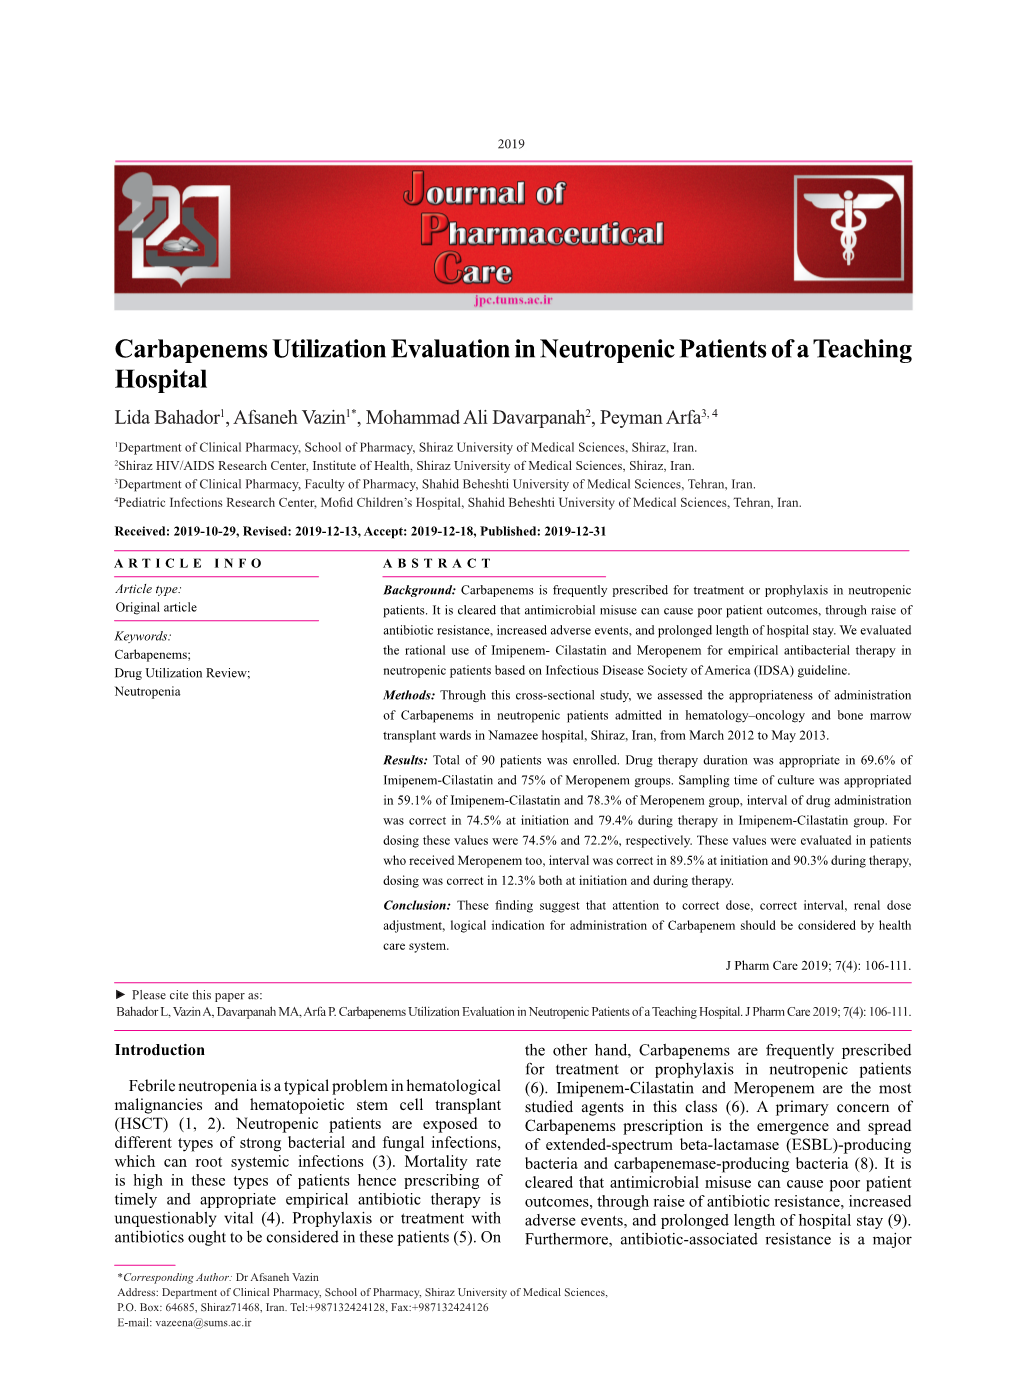 Carbapenems Utilization Evaluation in Neutropenic Patients of A